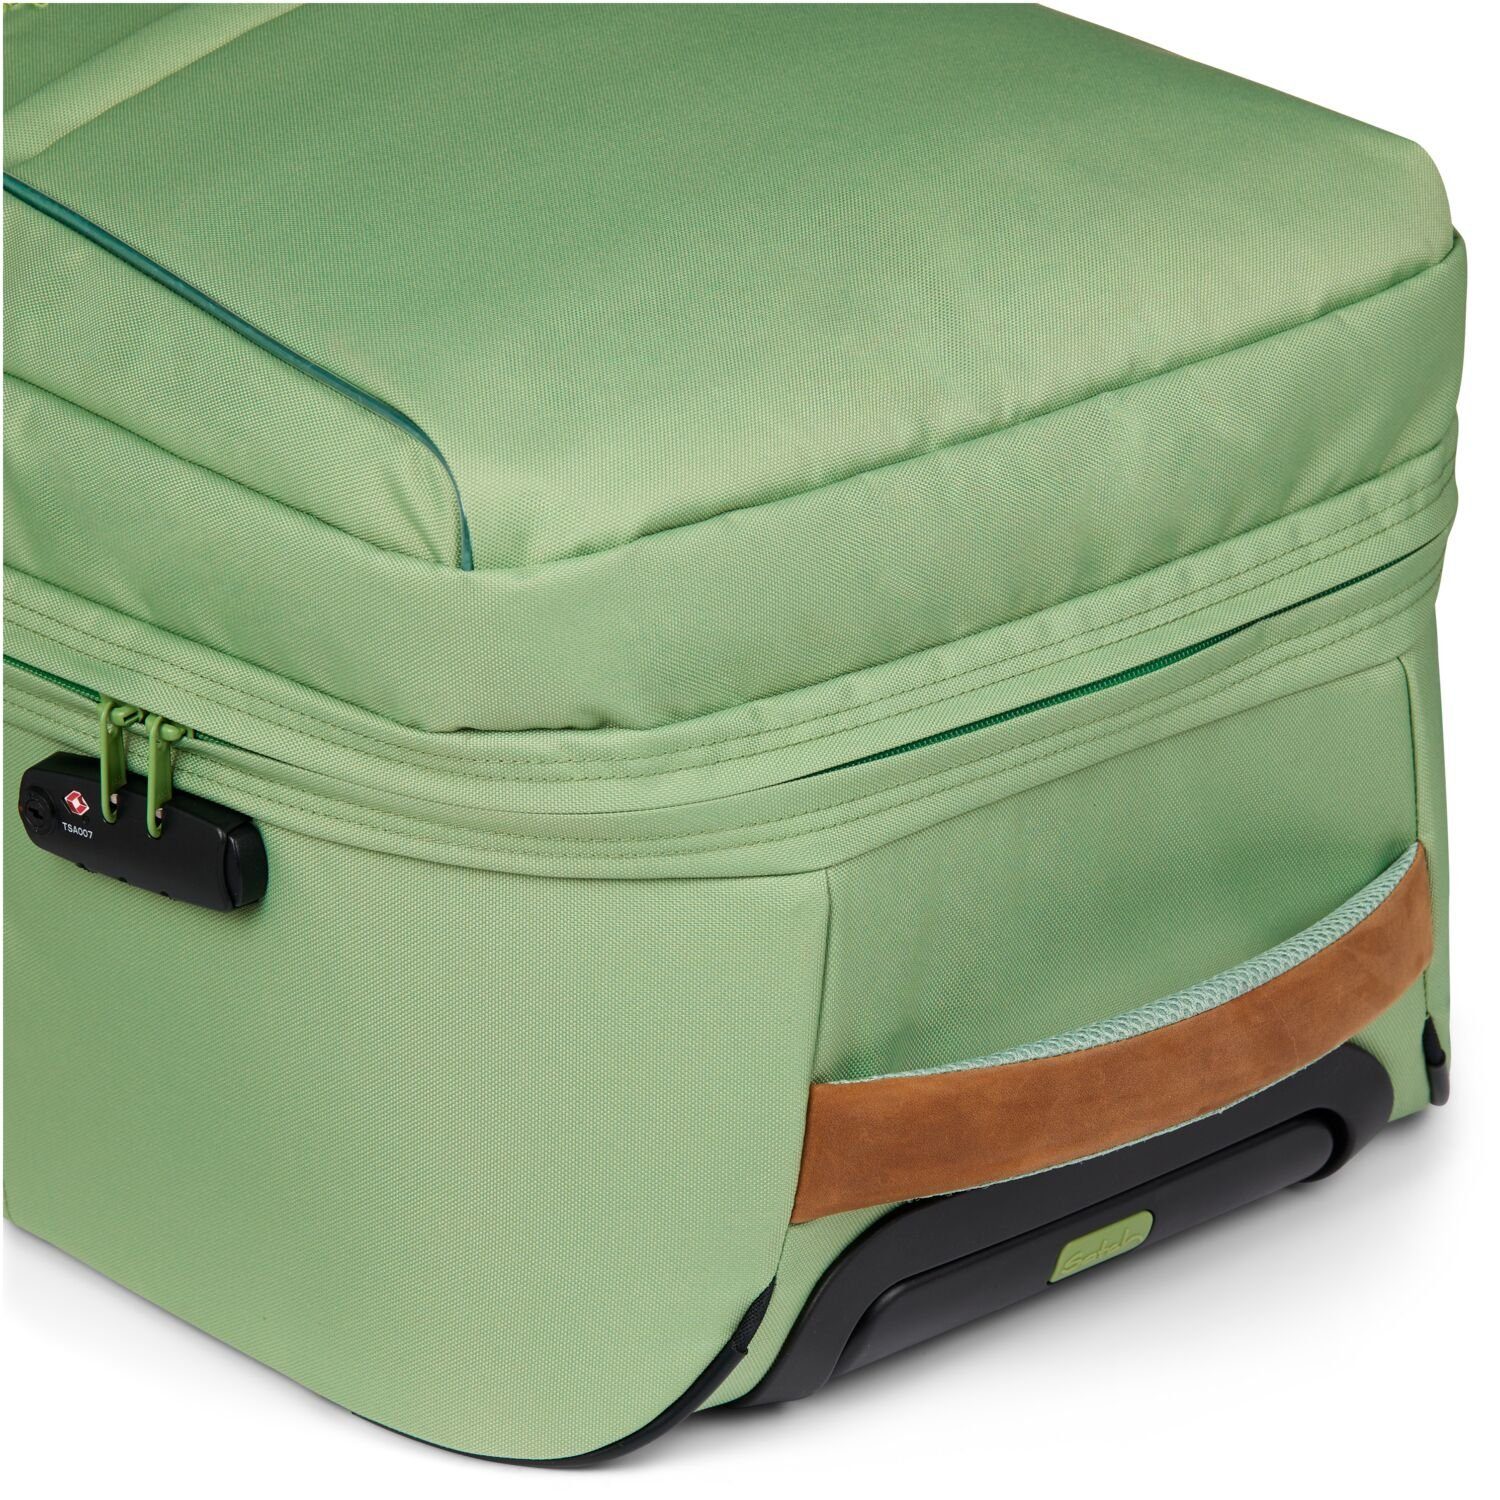 Trolley Green 2 (Koffer, Pure M 60 Flow TSA Reisegepäck Jade inkl. Satch Liter, Schloss, Wäschebeutel), Reisetasche